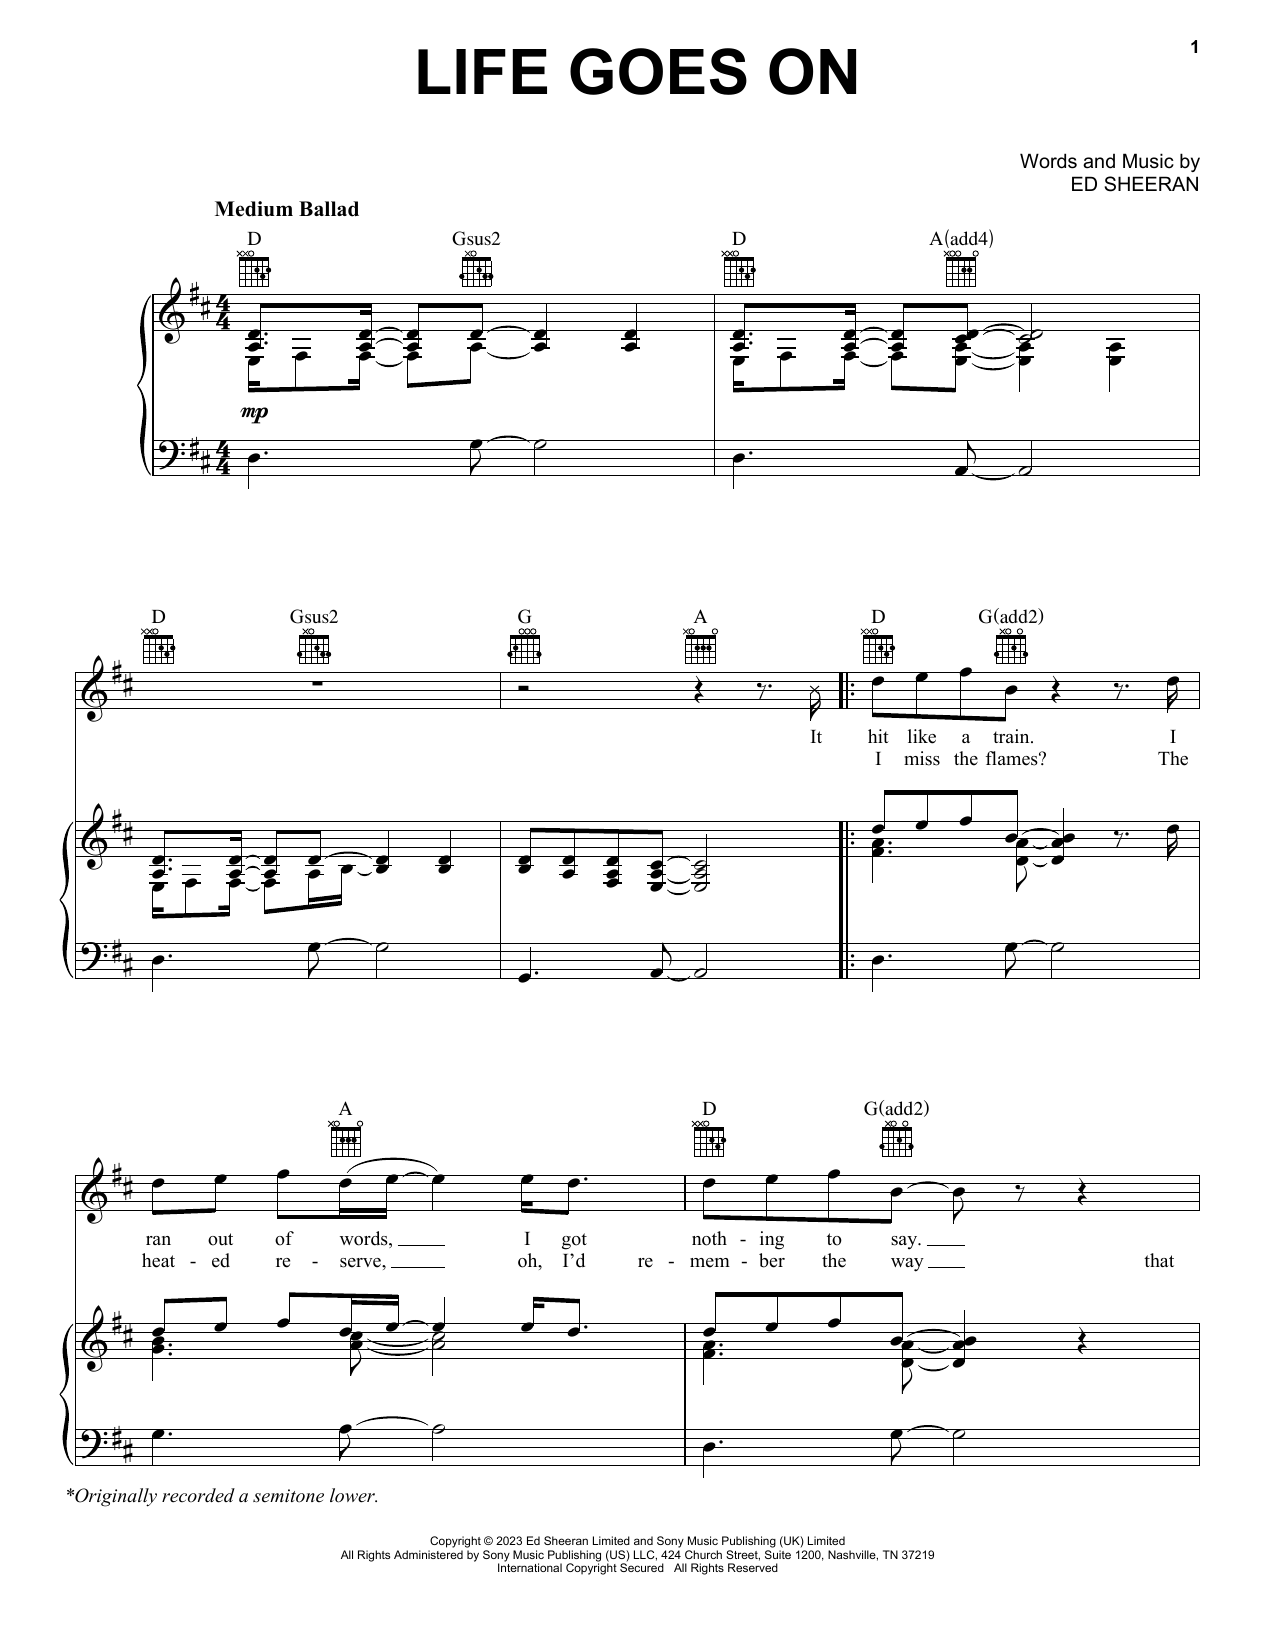 Ed Sheeran Life Goes On sheet music notes and chords. Download Printable PDF.